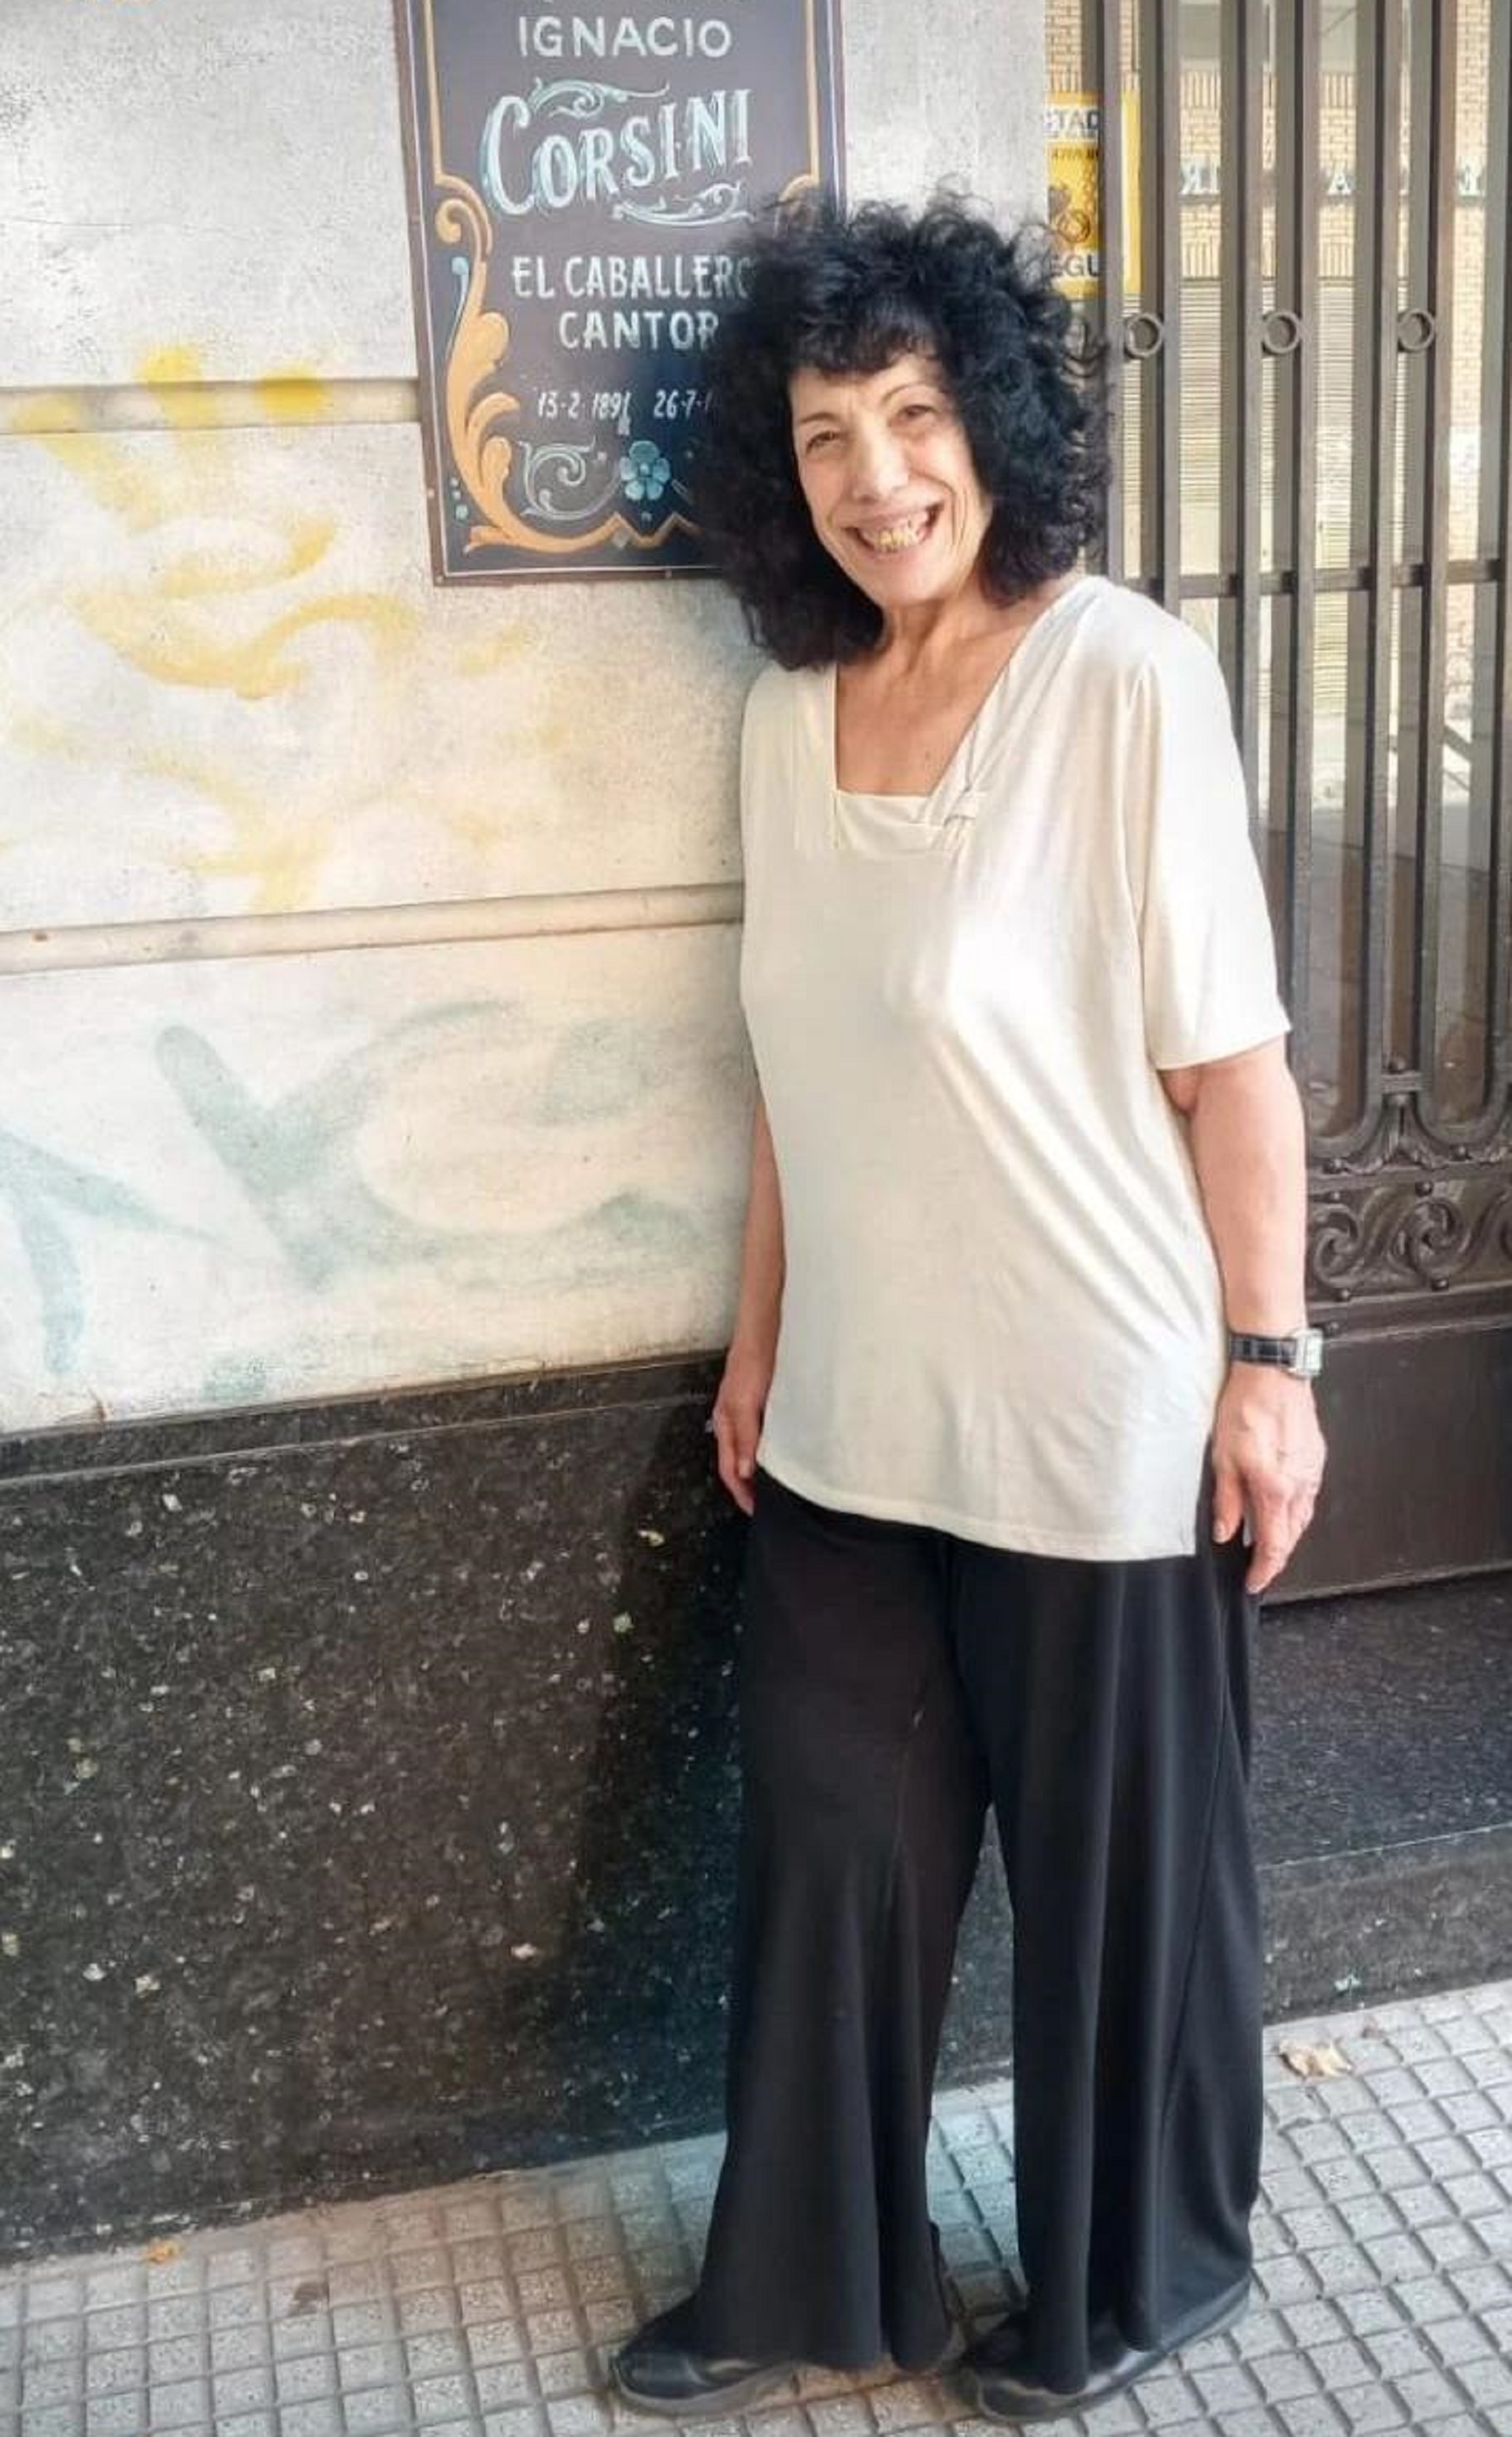 In two years, Marita Monteleone has lost 74 kilos